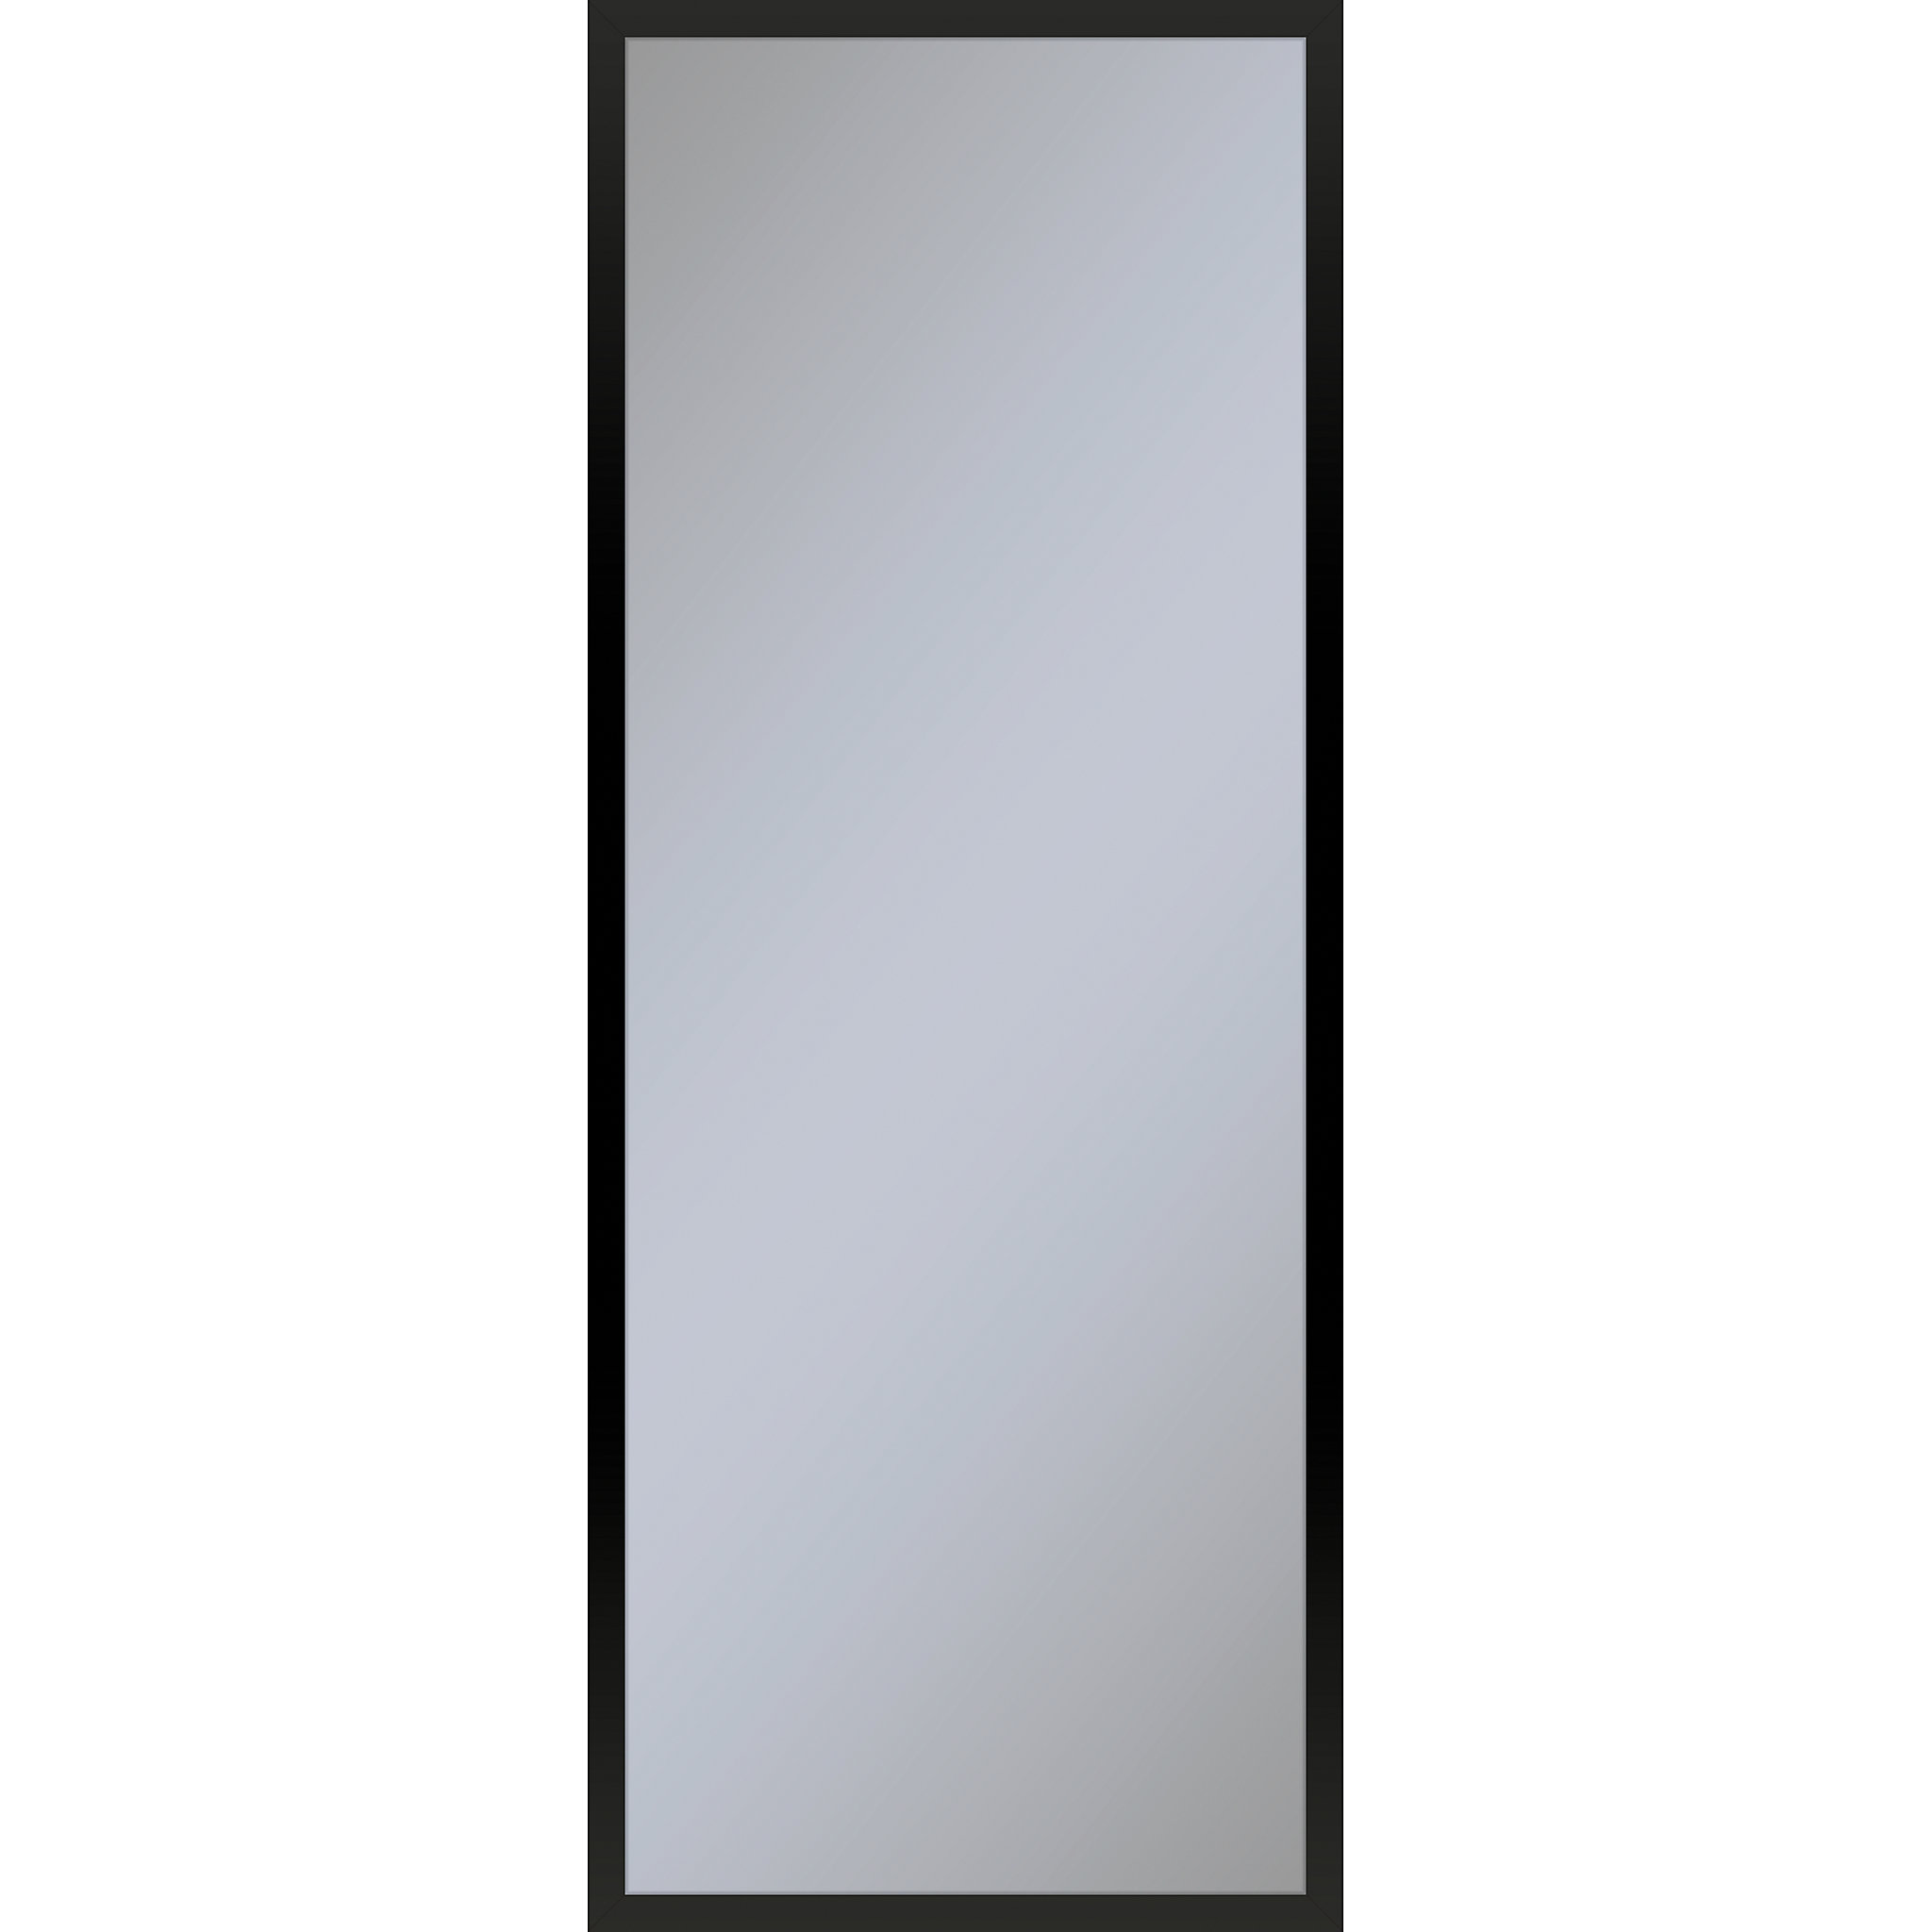 Robern PC1640D4TNN83 Profiles Framed Cabinet, 16" x 40" x 4", Matte Black, Non-Electric, Reversible Hinge